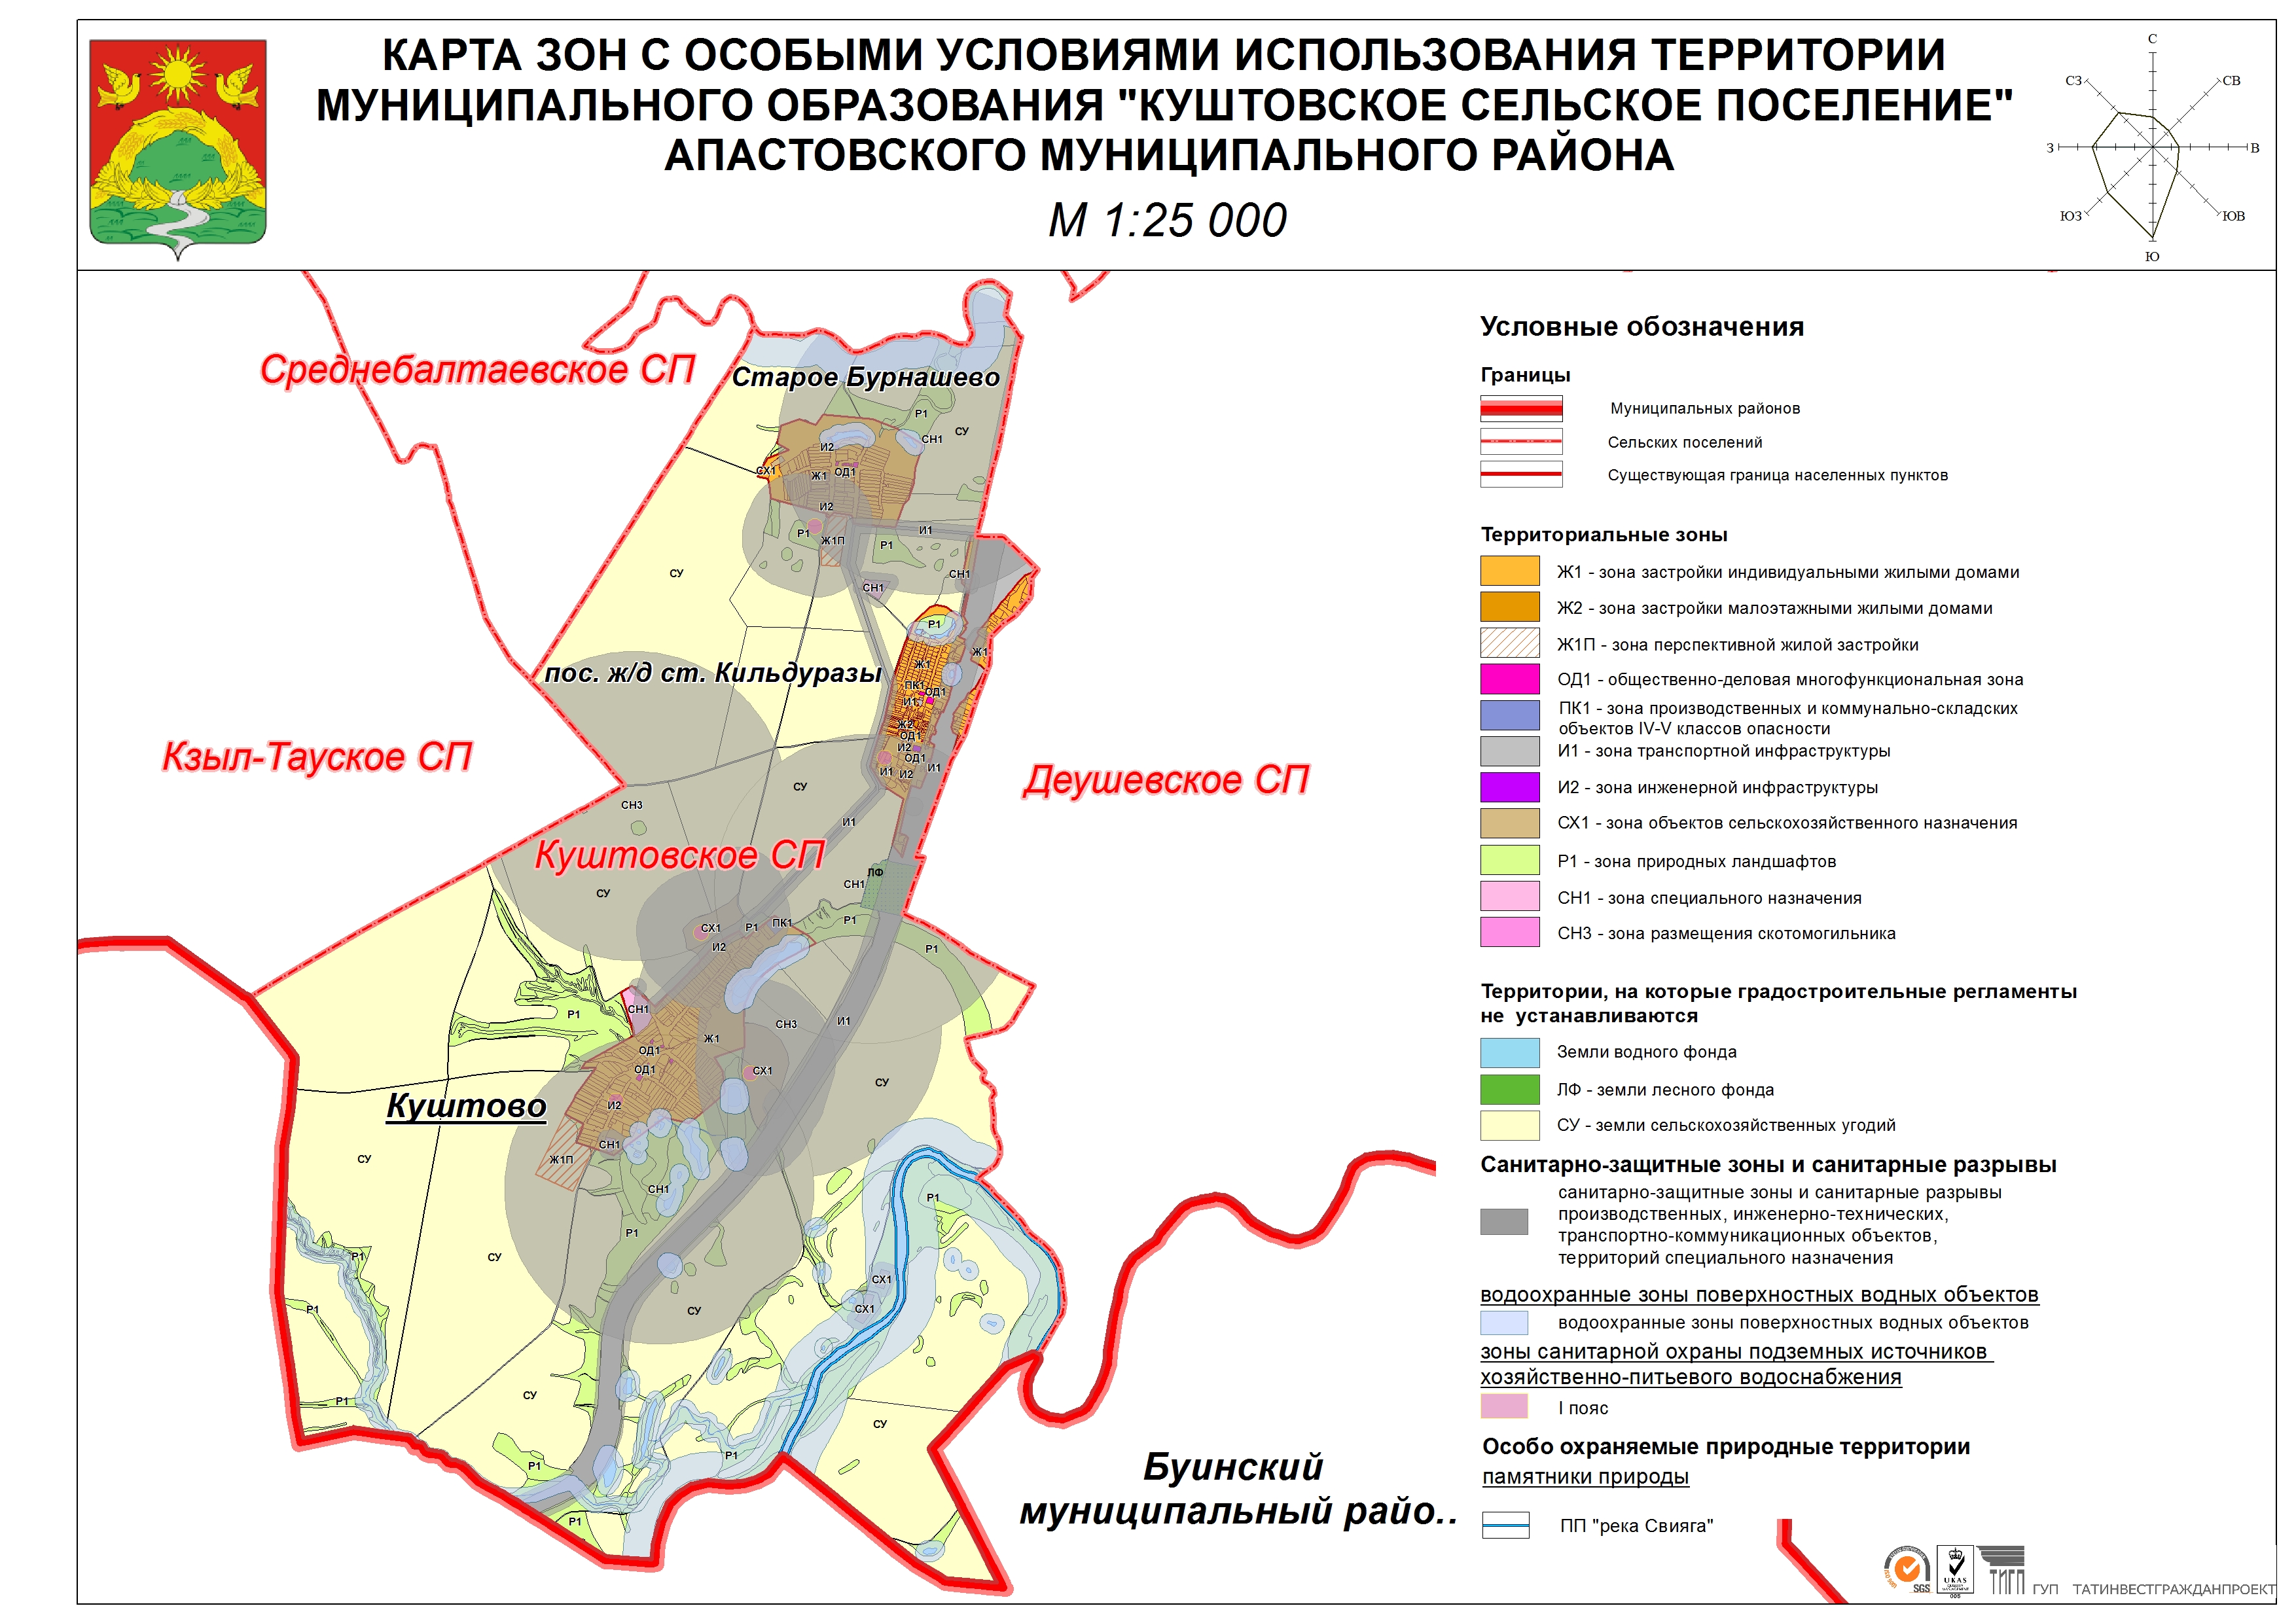 Карта водоохранных зон татарстана